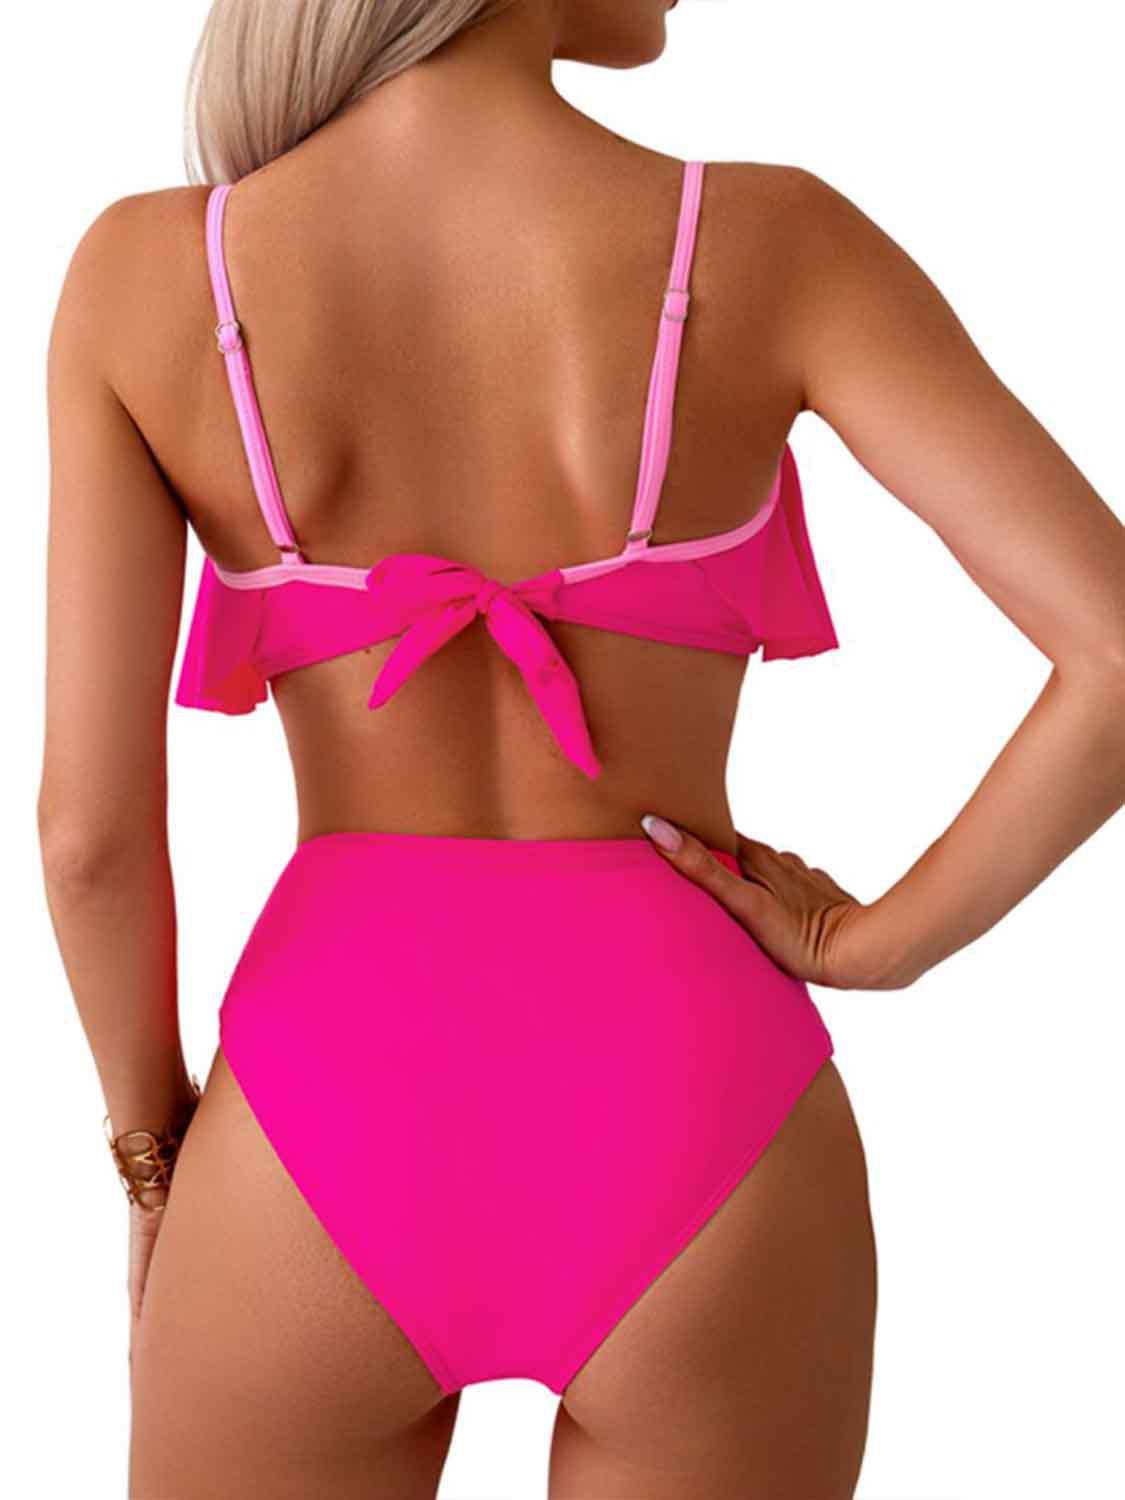 a woman in a pink bikini top and bottom